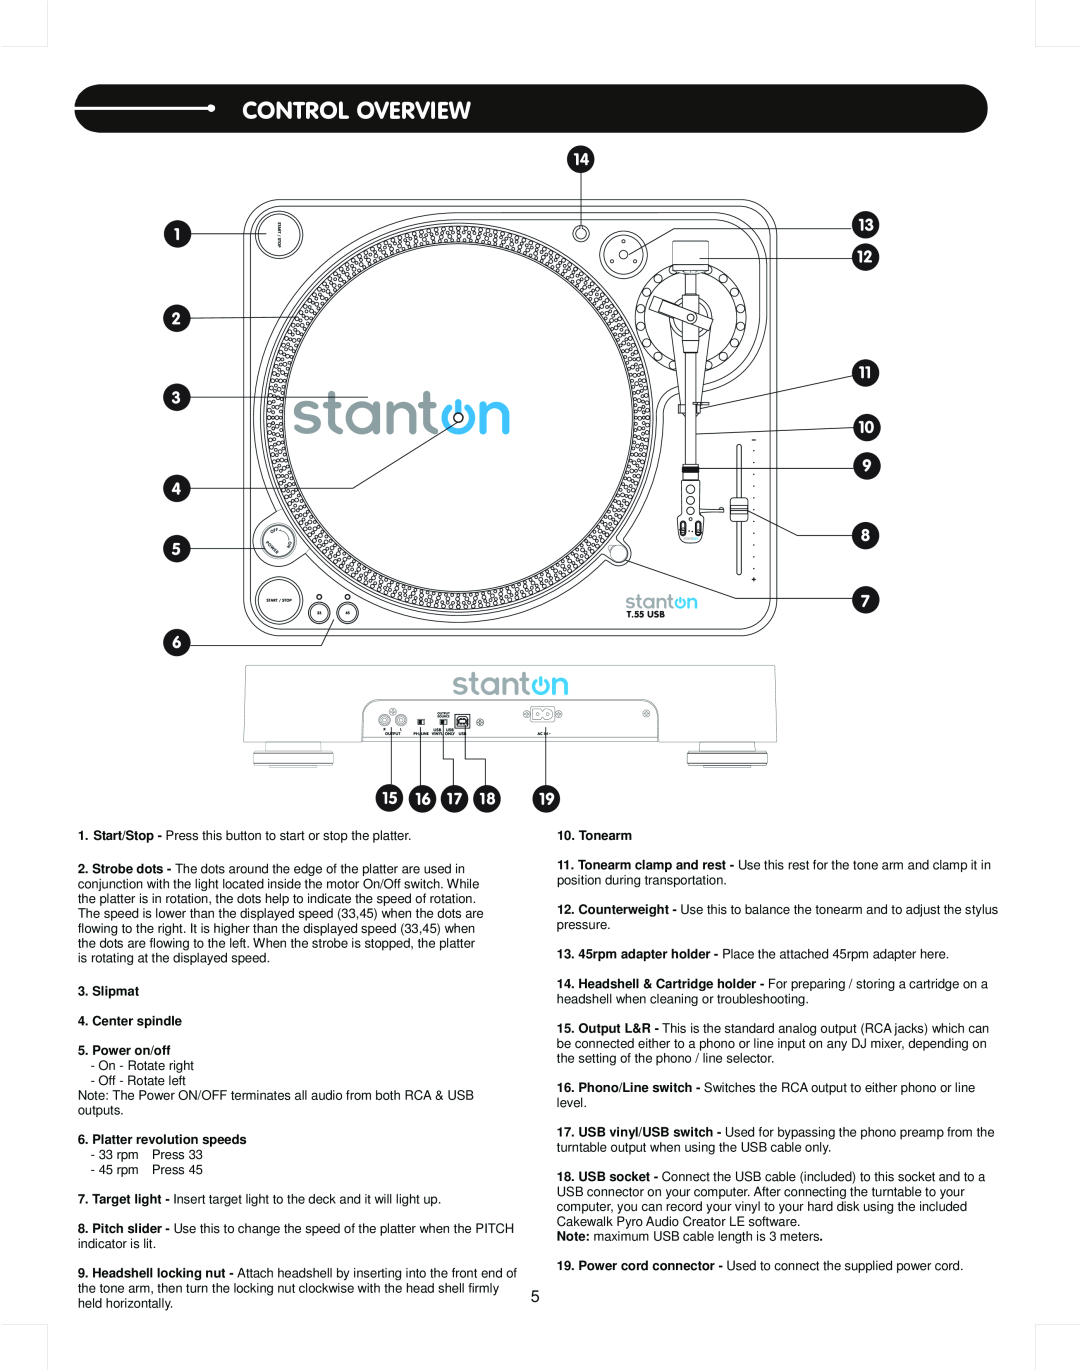 Stanton T.55 USB manual Control Overview, Slipmat 4.Center spindle 5.Power on/off, Platter revolution speeds, Tonearm 